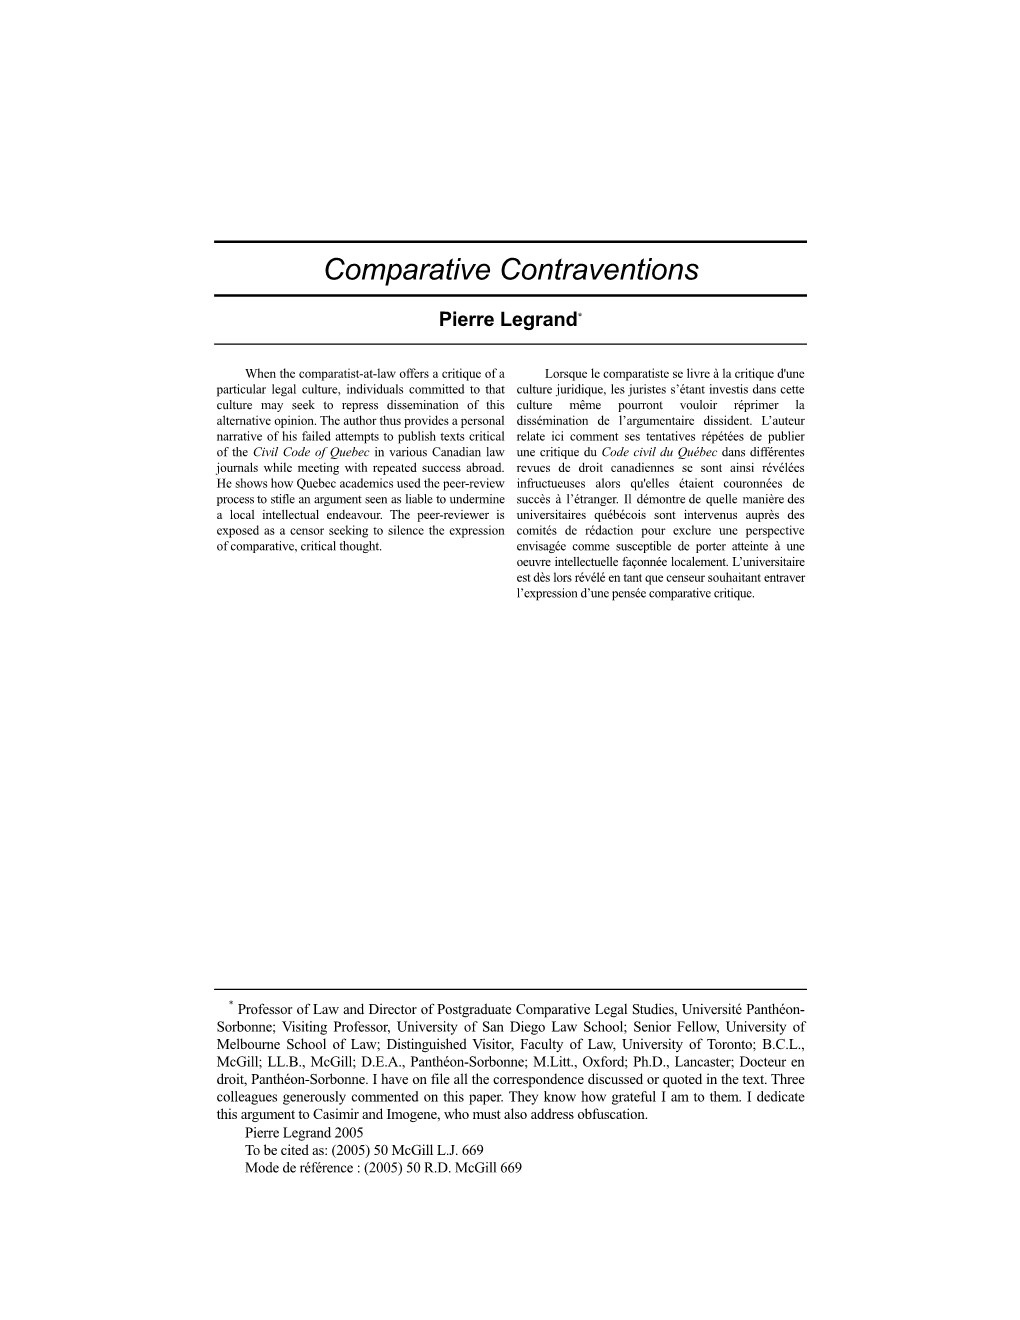 Comparative Contraventions